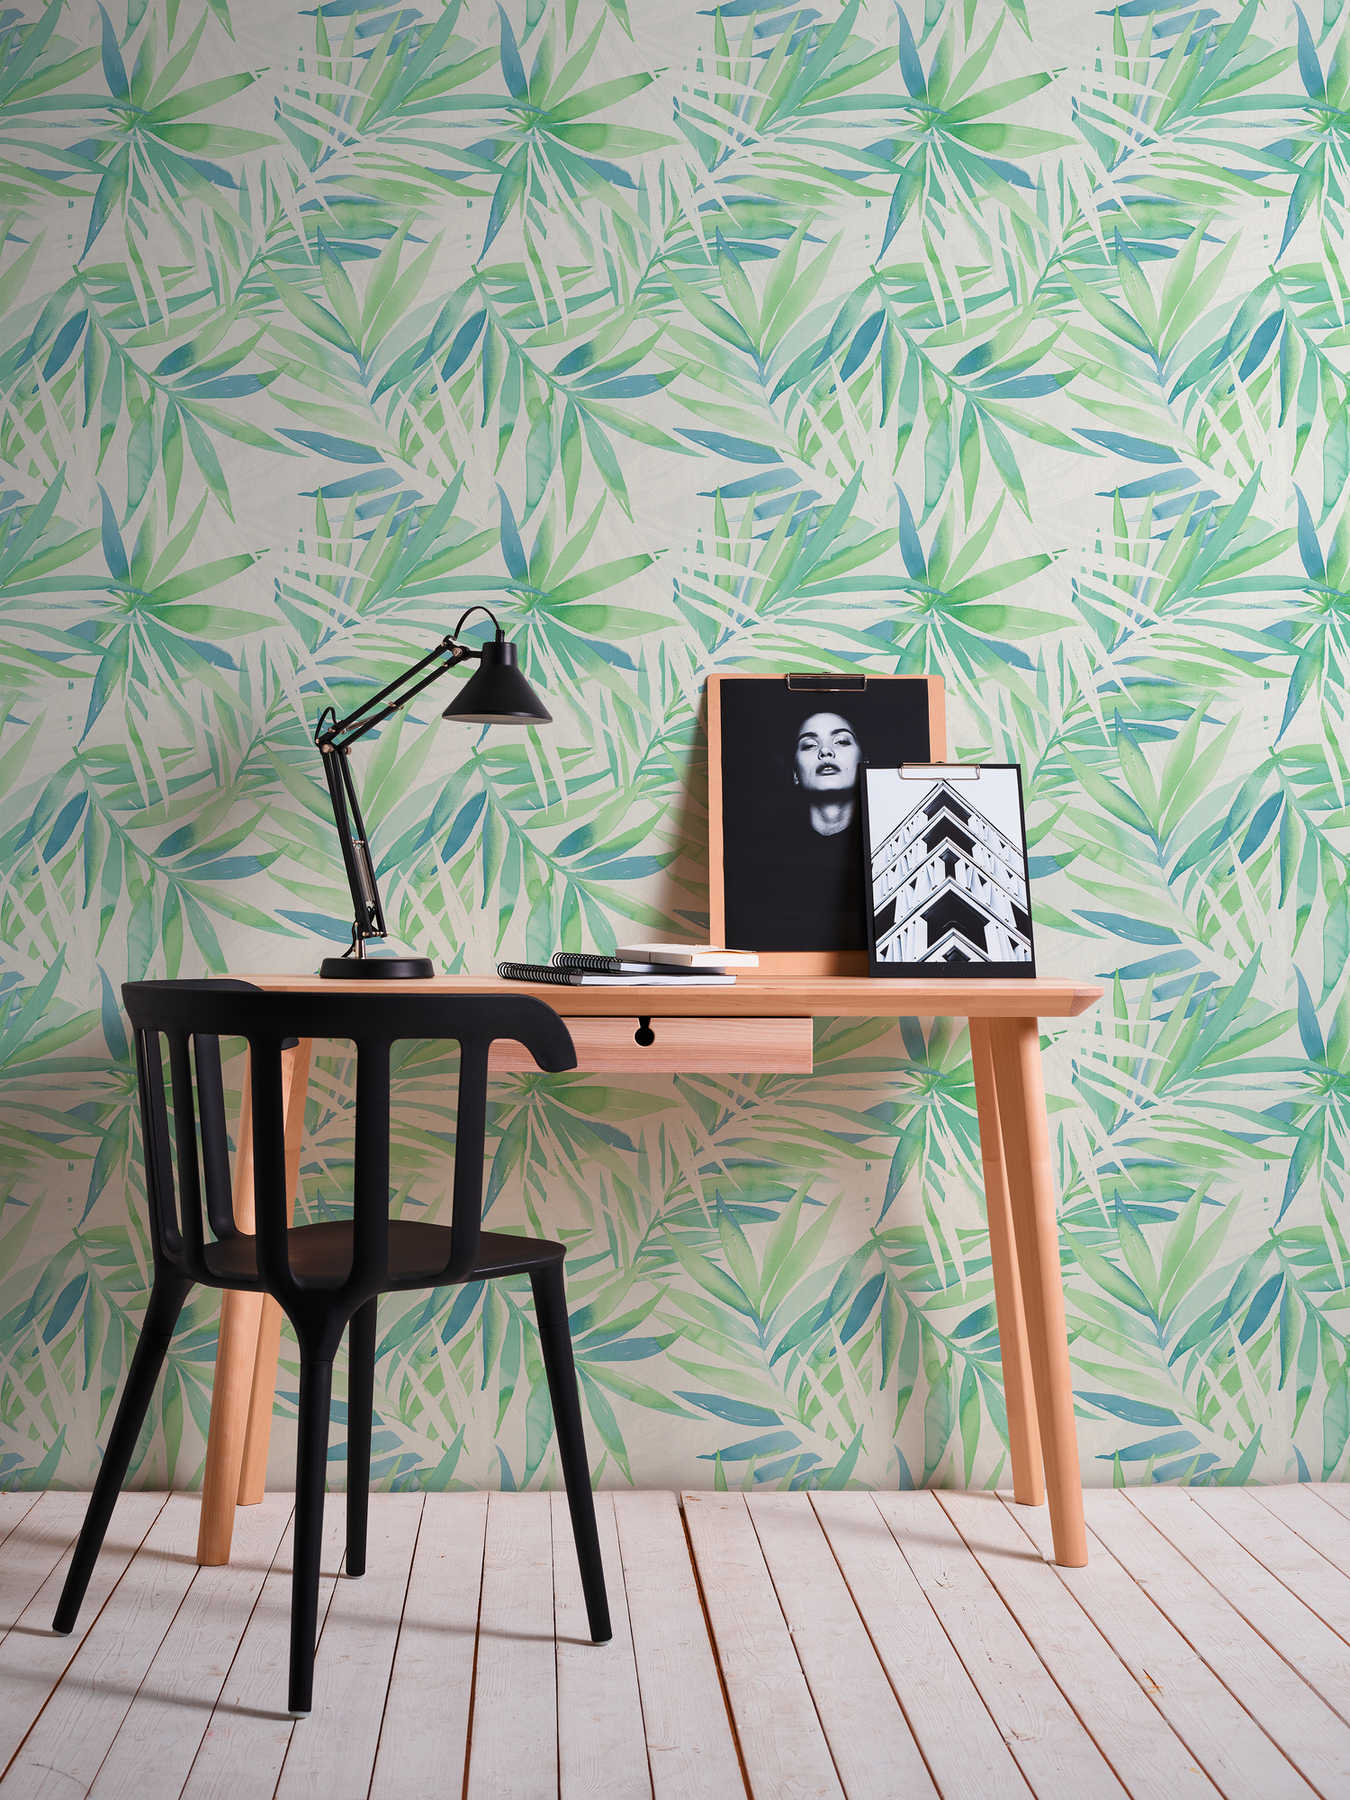             Jungle wallpaper leaf motif in watercolour style - green
        